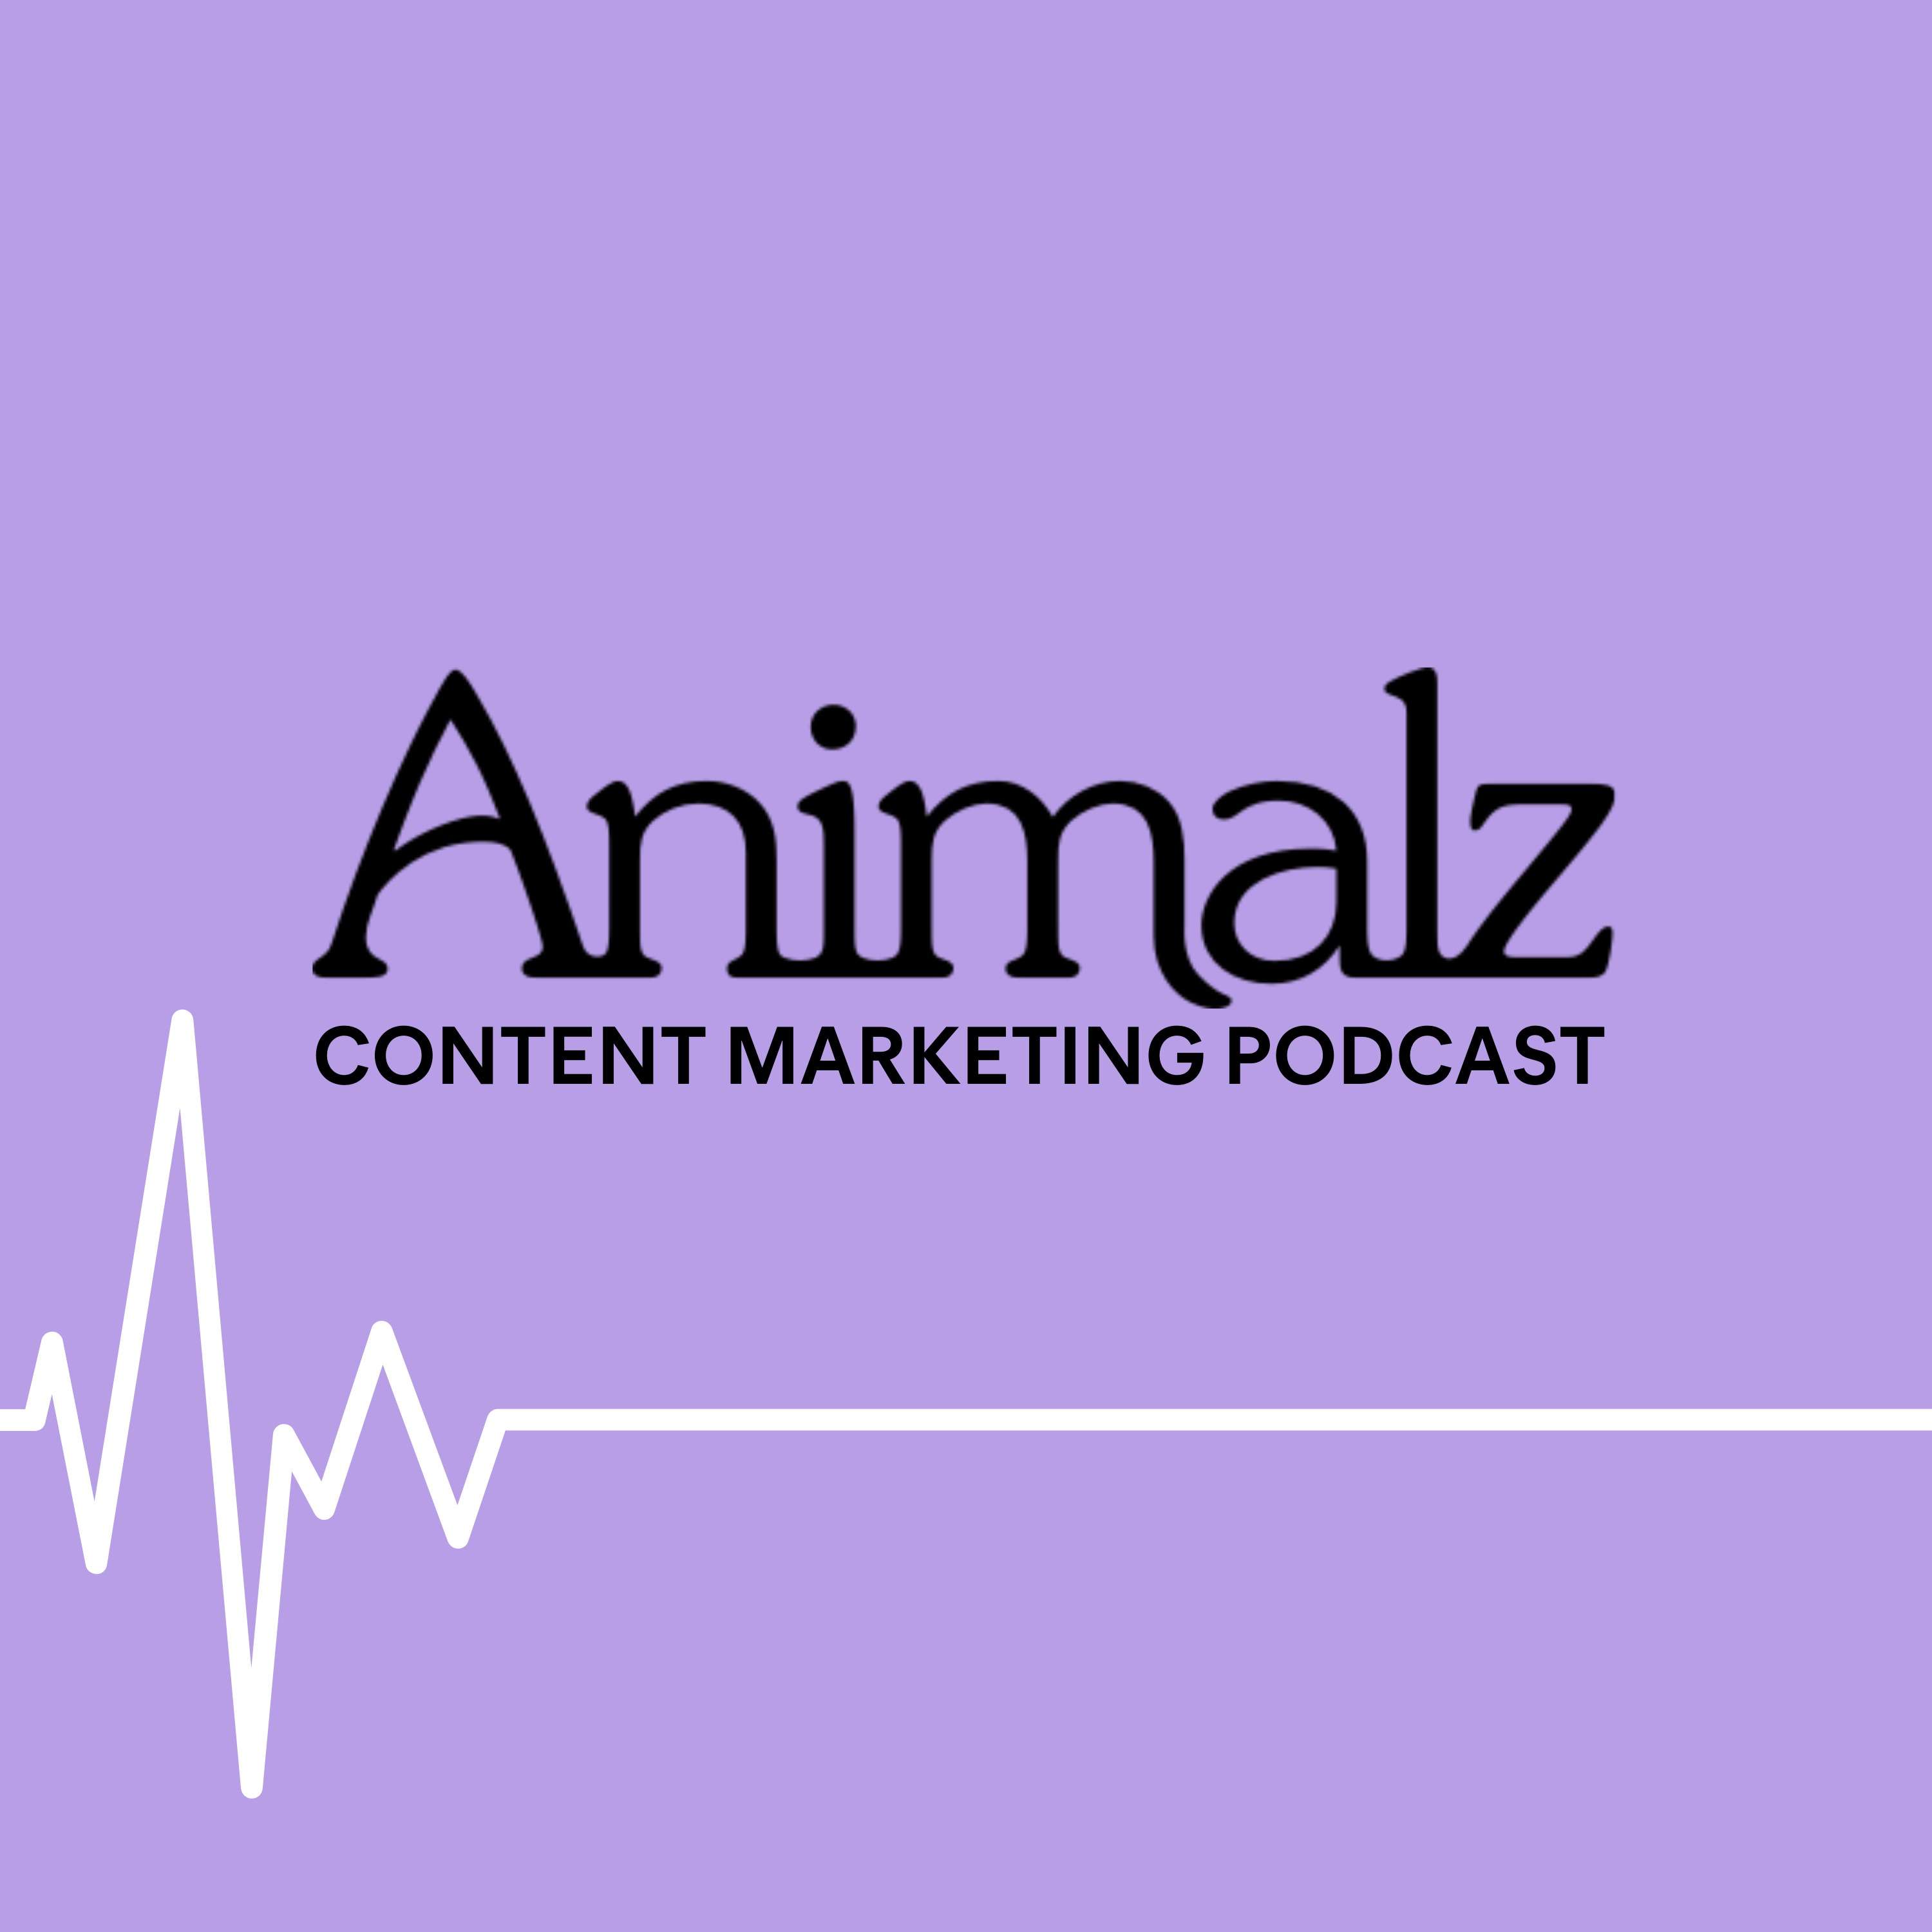 The Animalz Content Marketing Podcast podcast show image